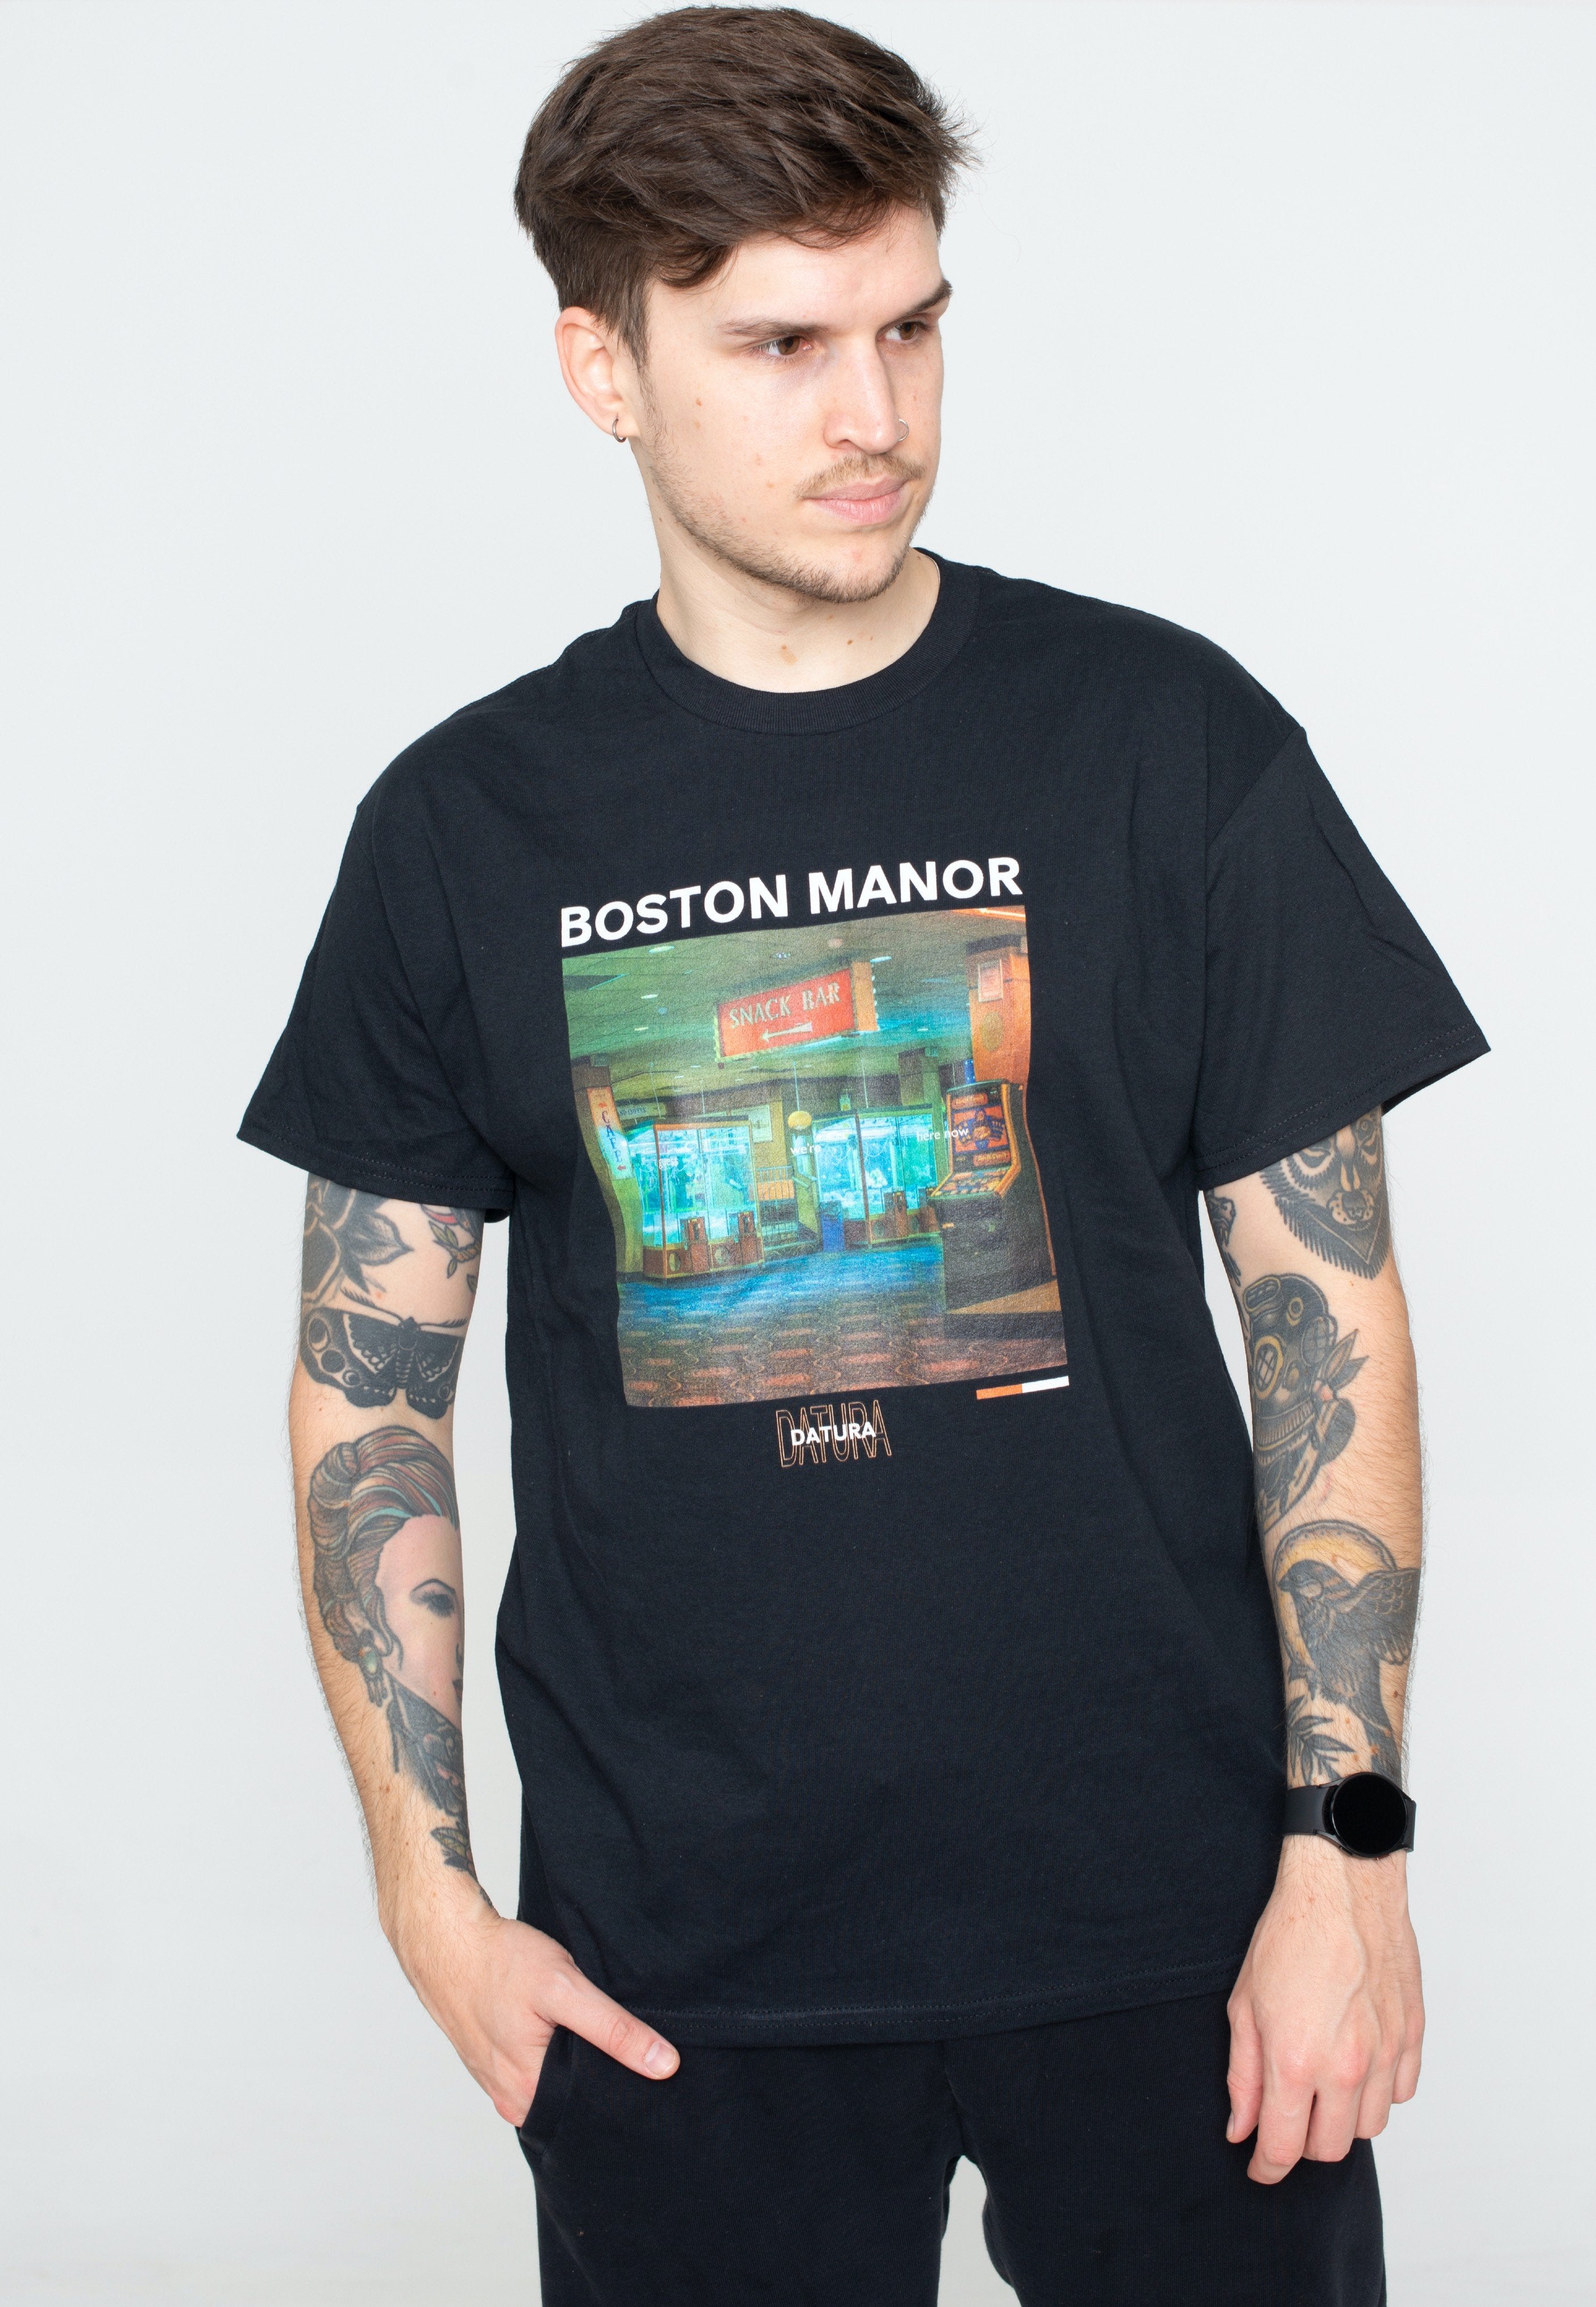 Boston Manor - Datura Cover - T-Shirt